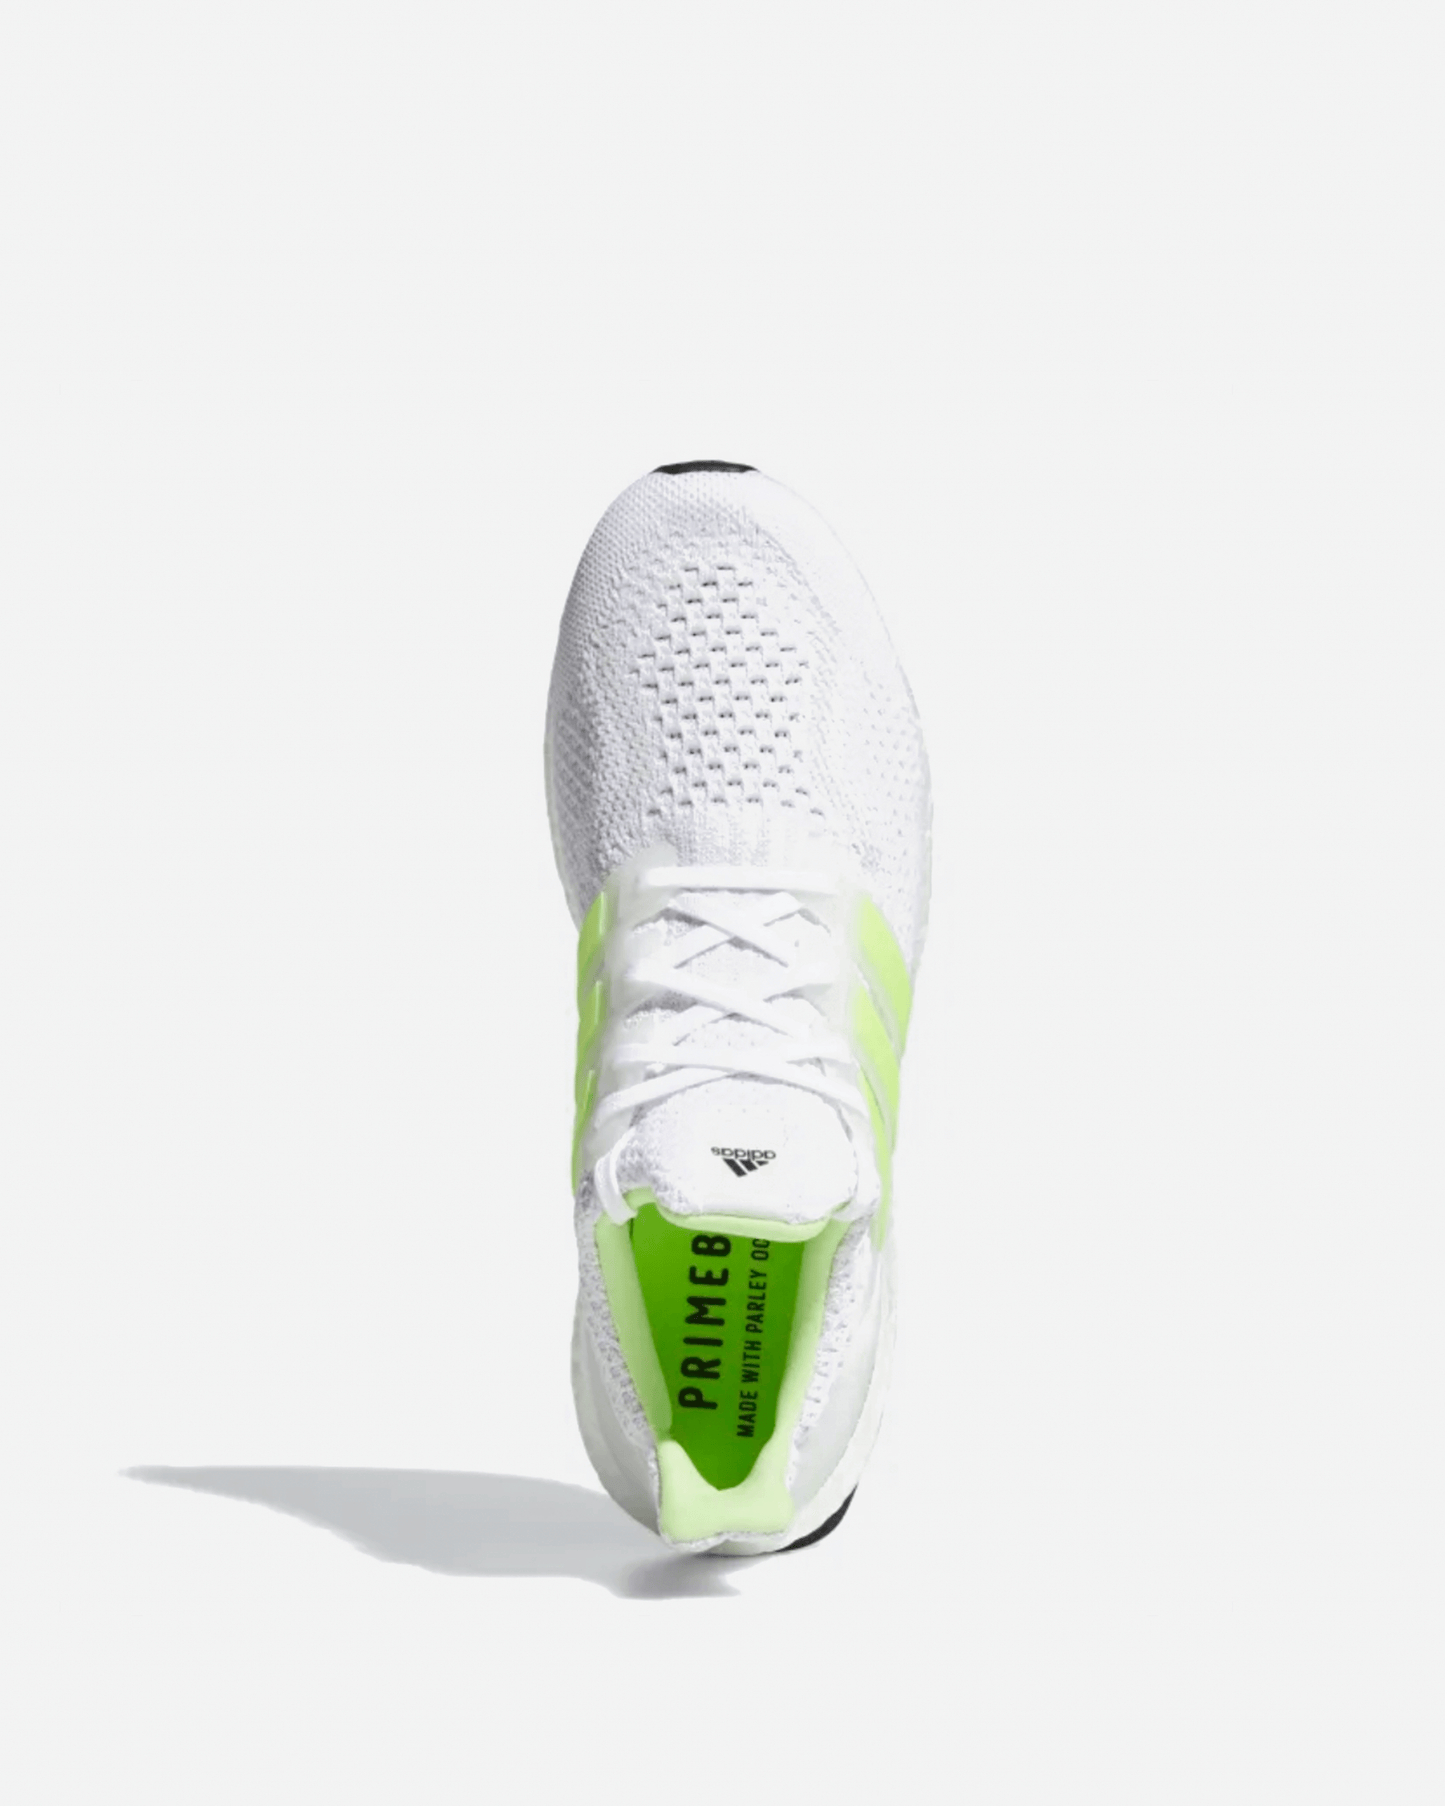 Adidas Men's Sneakers Ultraboost 5.0 DNA in Cloud White